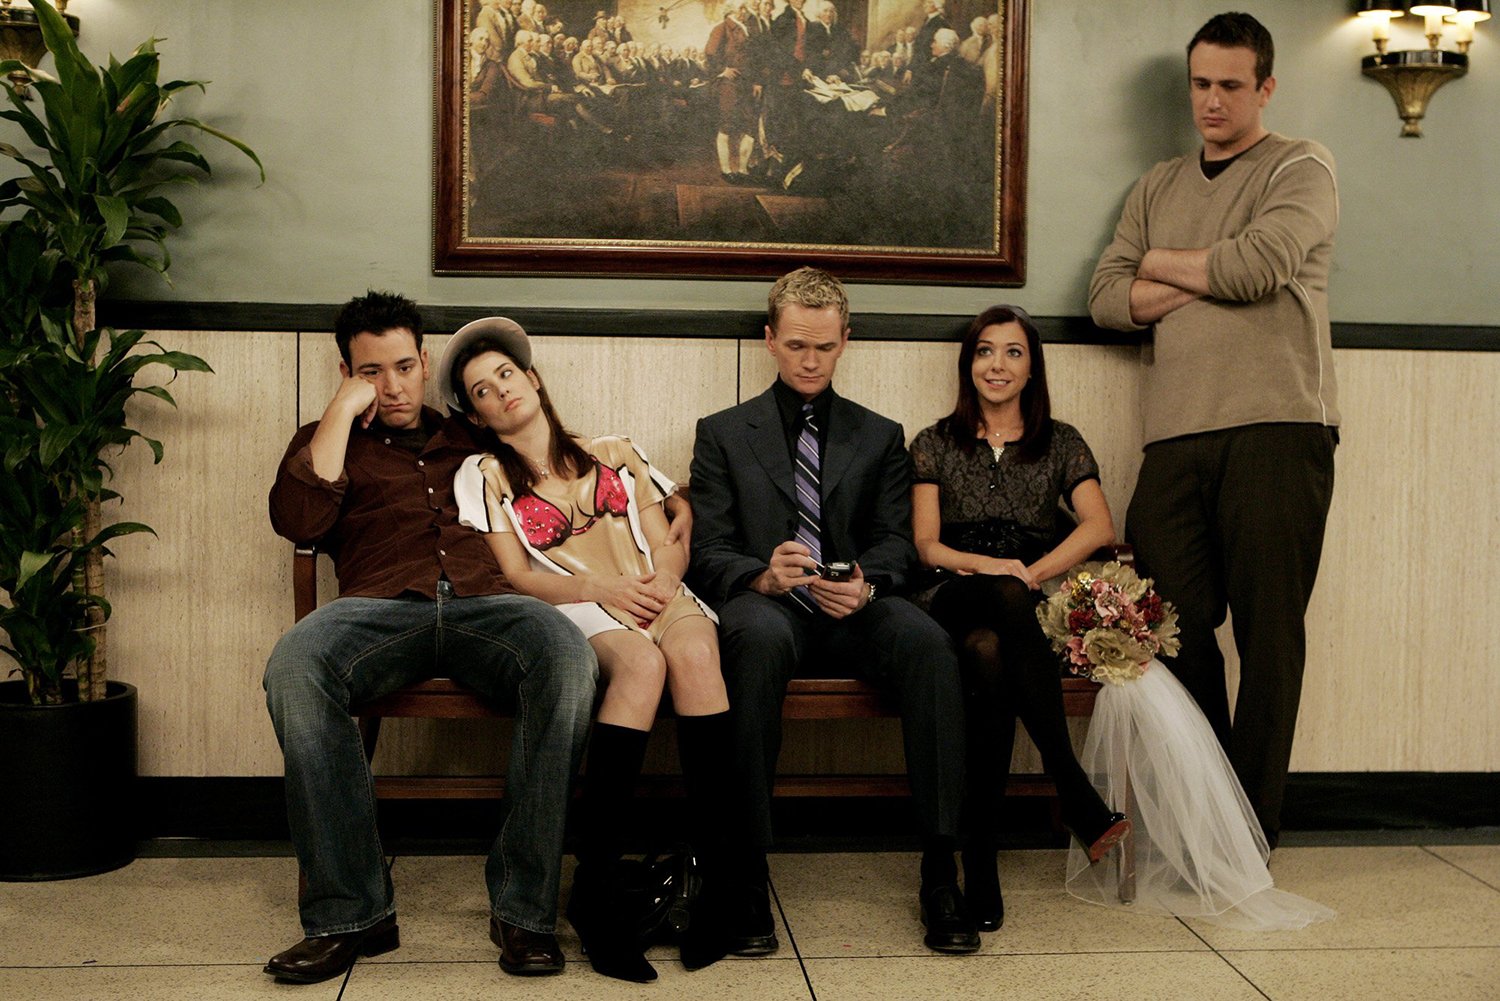 HIMYM characters Ted (Josh Radnor), Robin (Cobie Smulders), Barney (Neil Patrick Harris), Lily (Alyson Hannigan), and Marshall (Jason Segel)